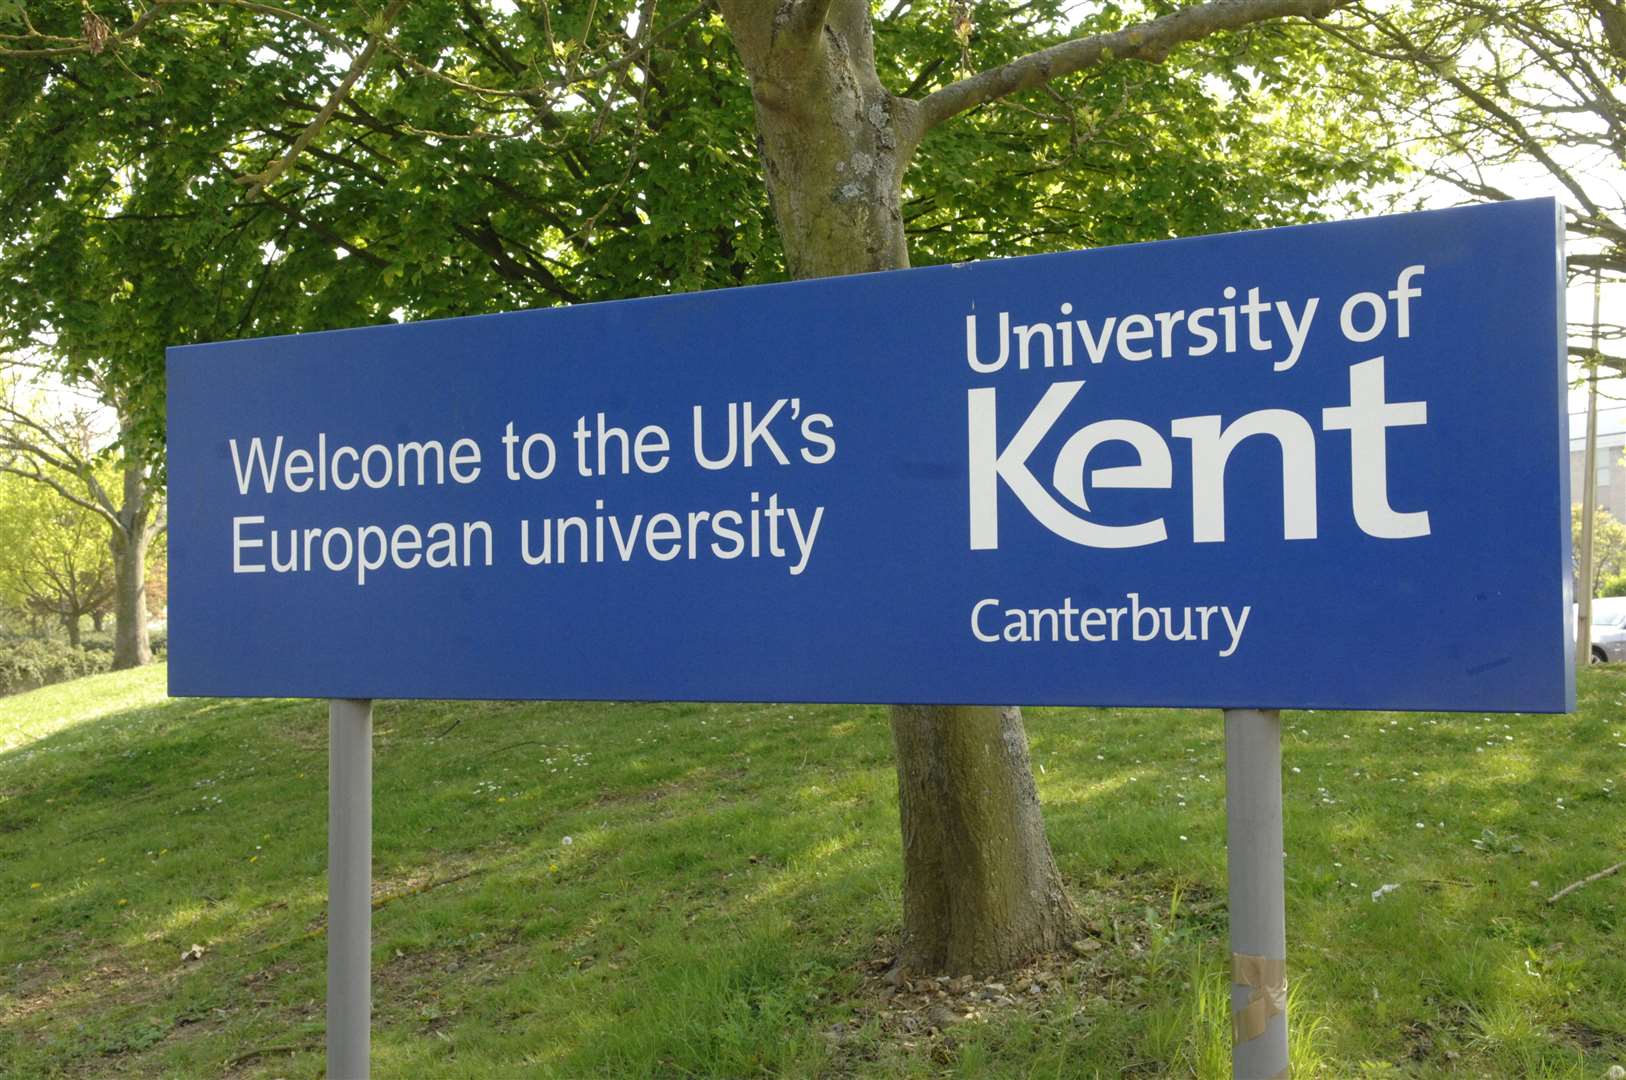 The University of Kent at Canterbury.